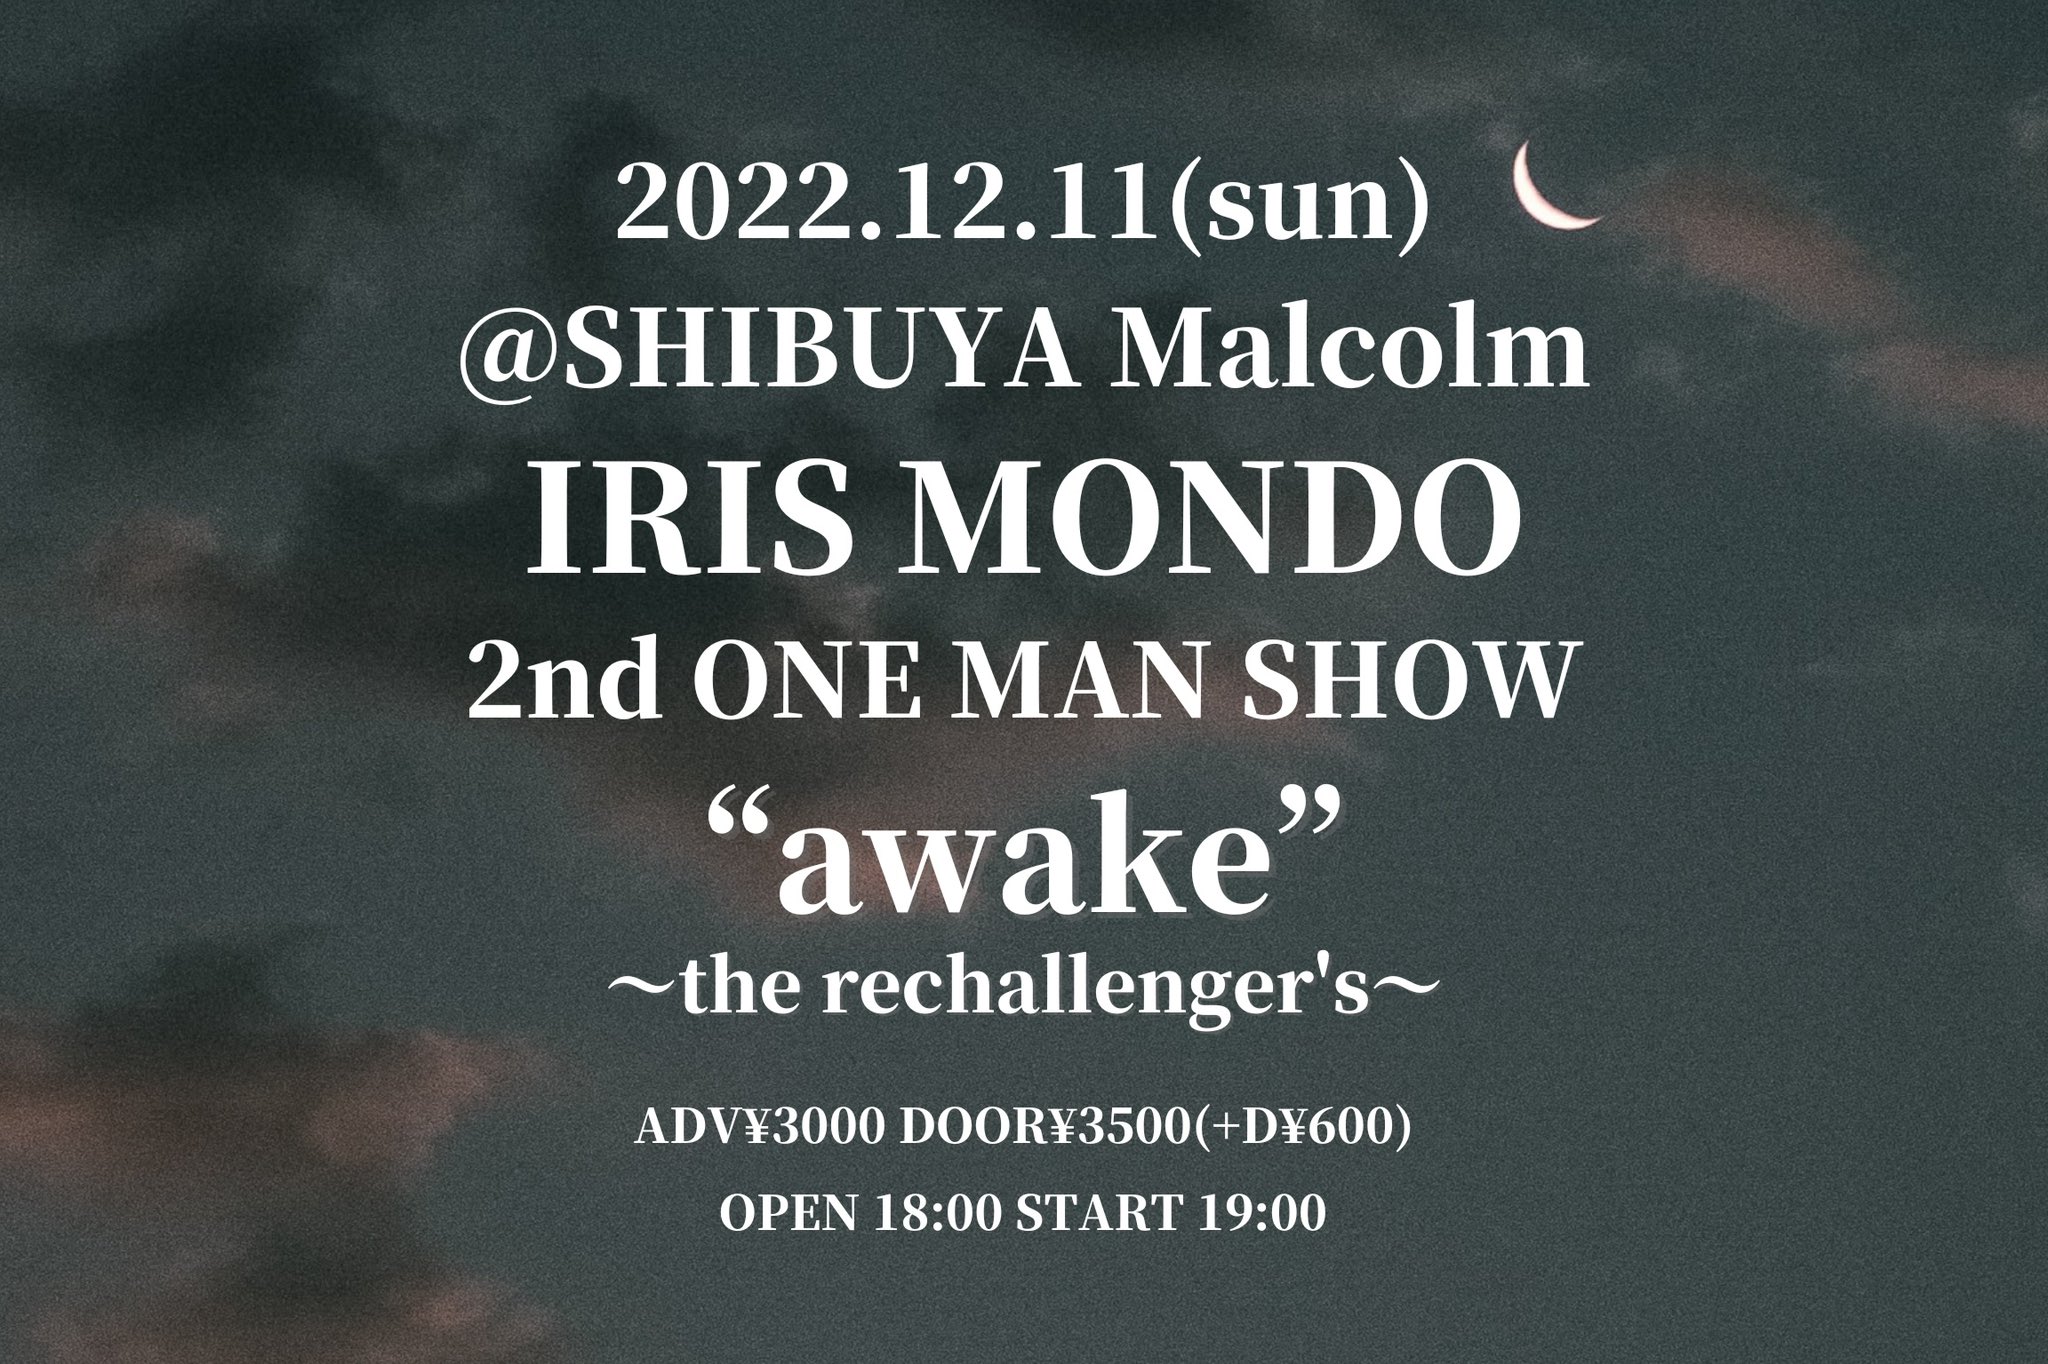 IRIS MONDO 2nd ONE MAN SHOW ”awake”~the rechallenger's~